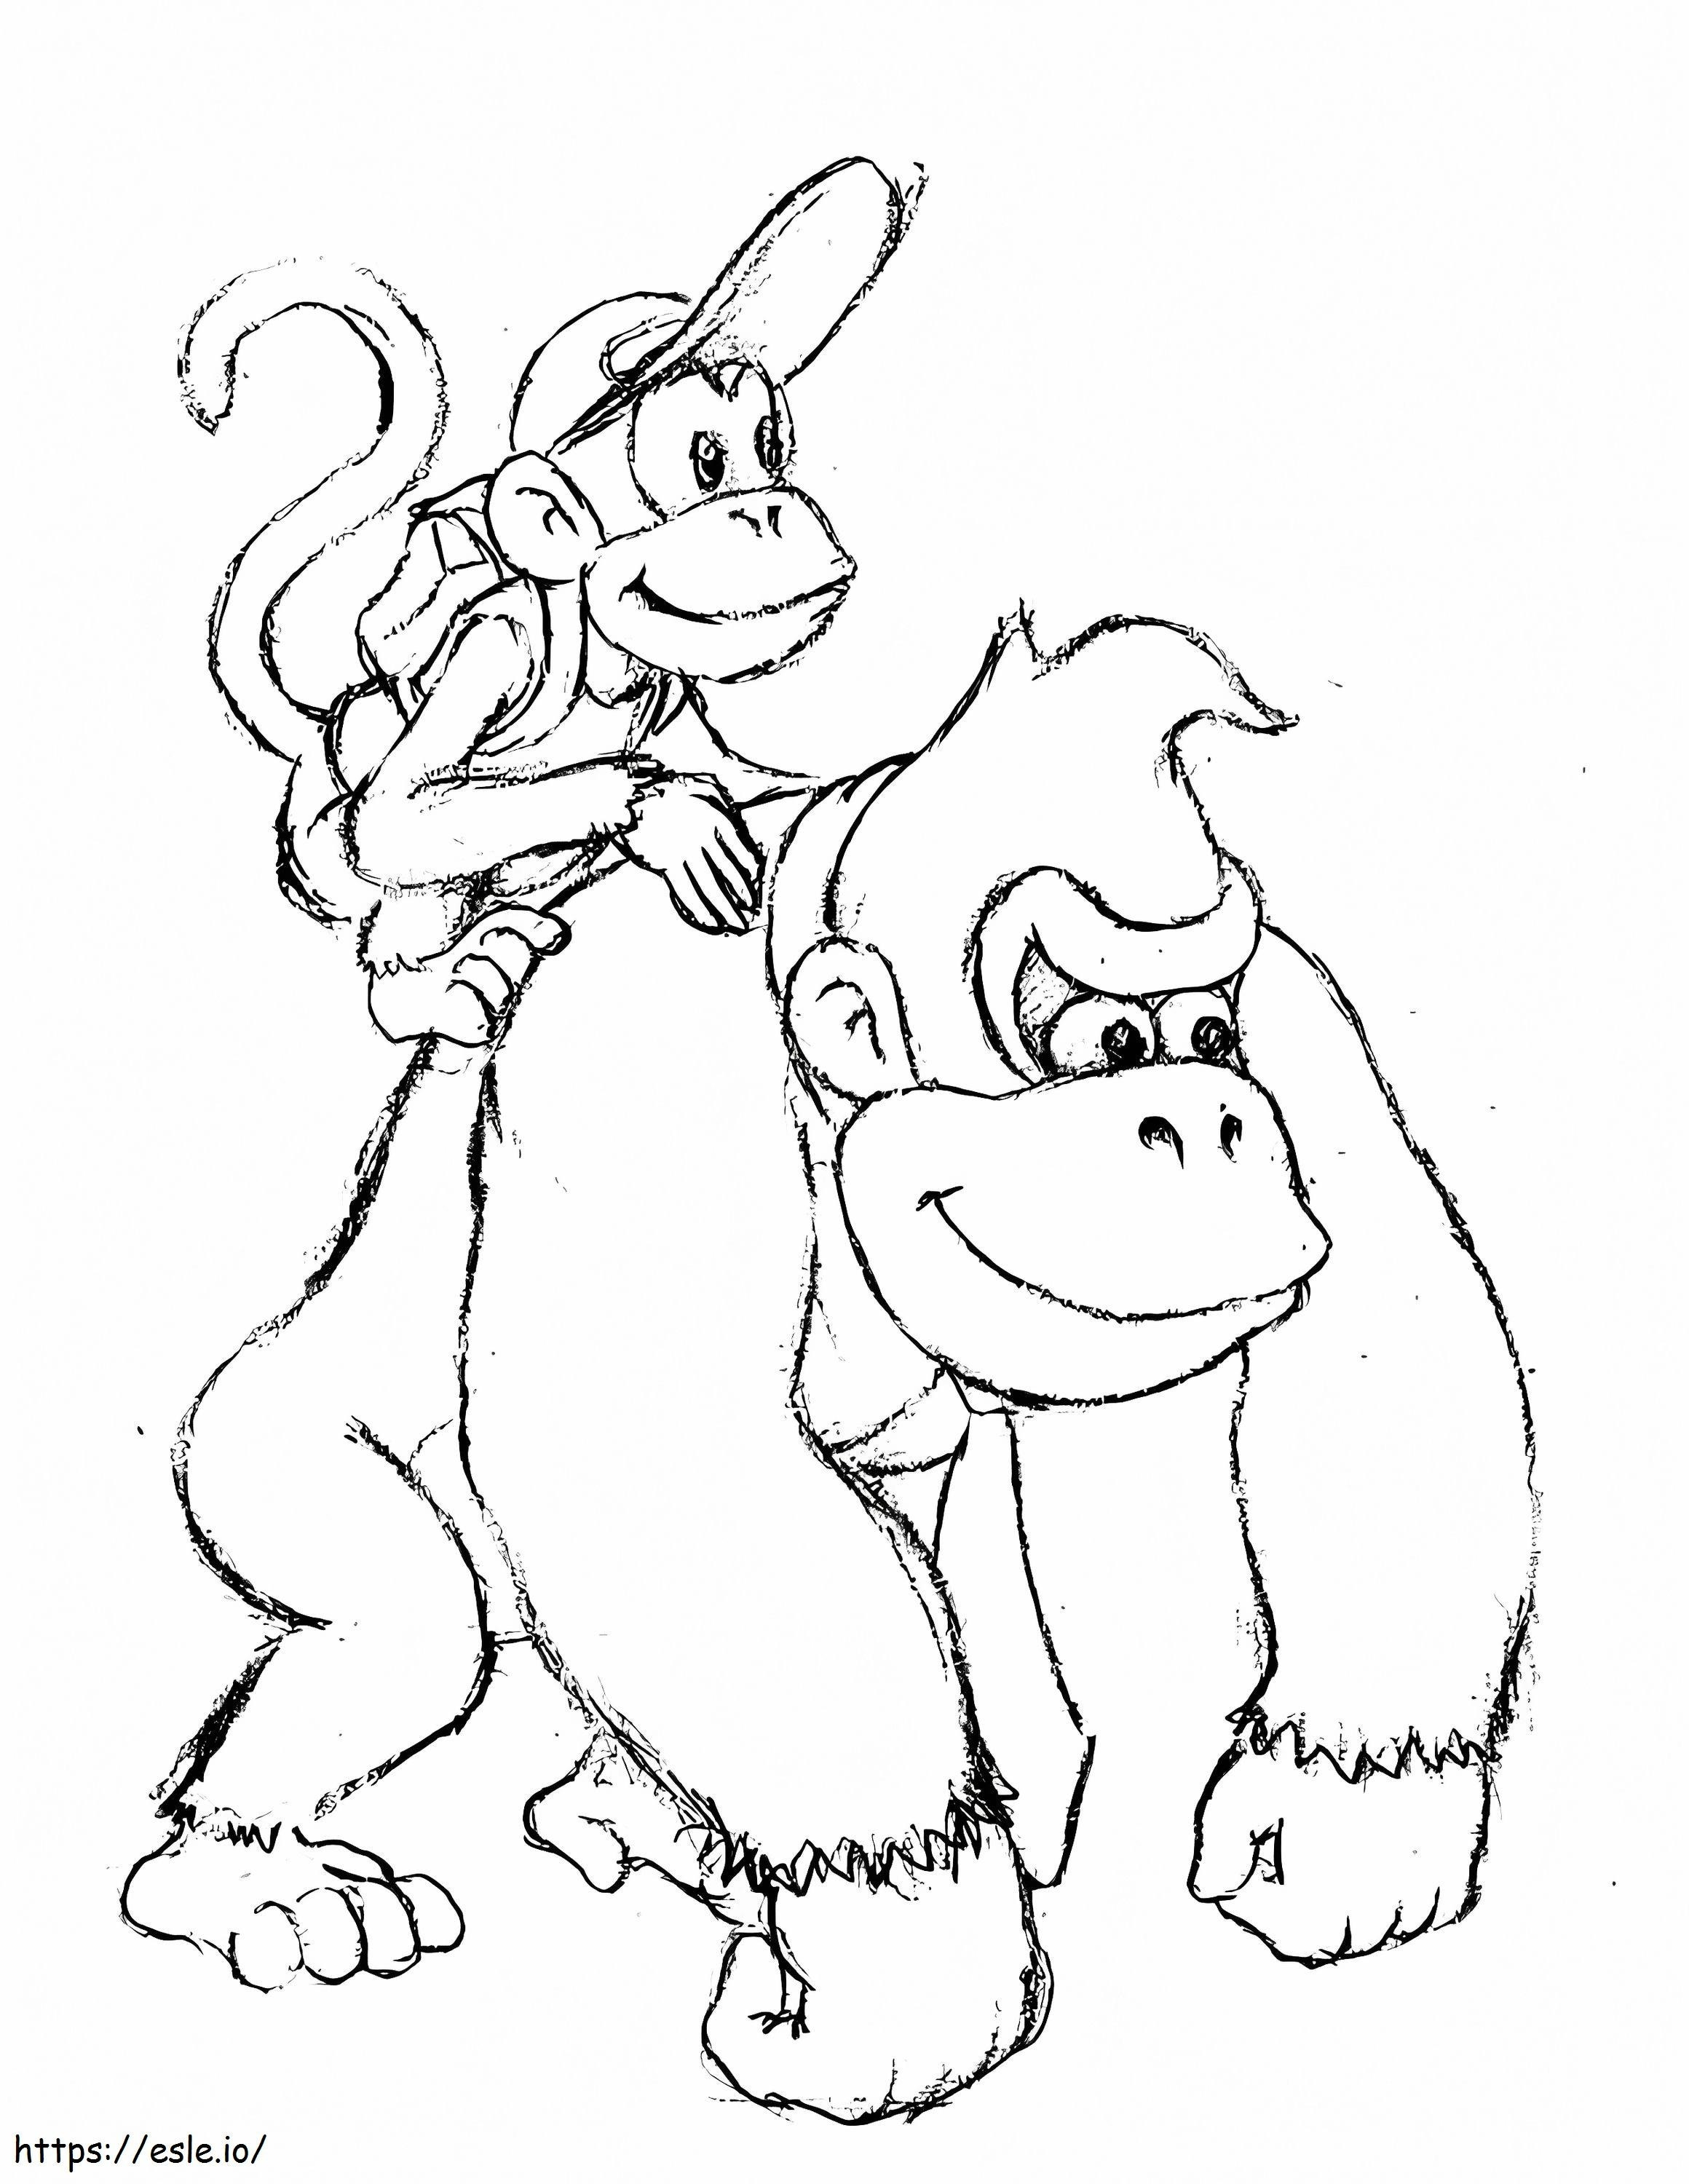 Coloriage Enveloppe Diddy Kong Donkey Kong à imprimer dessin